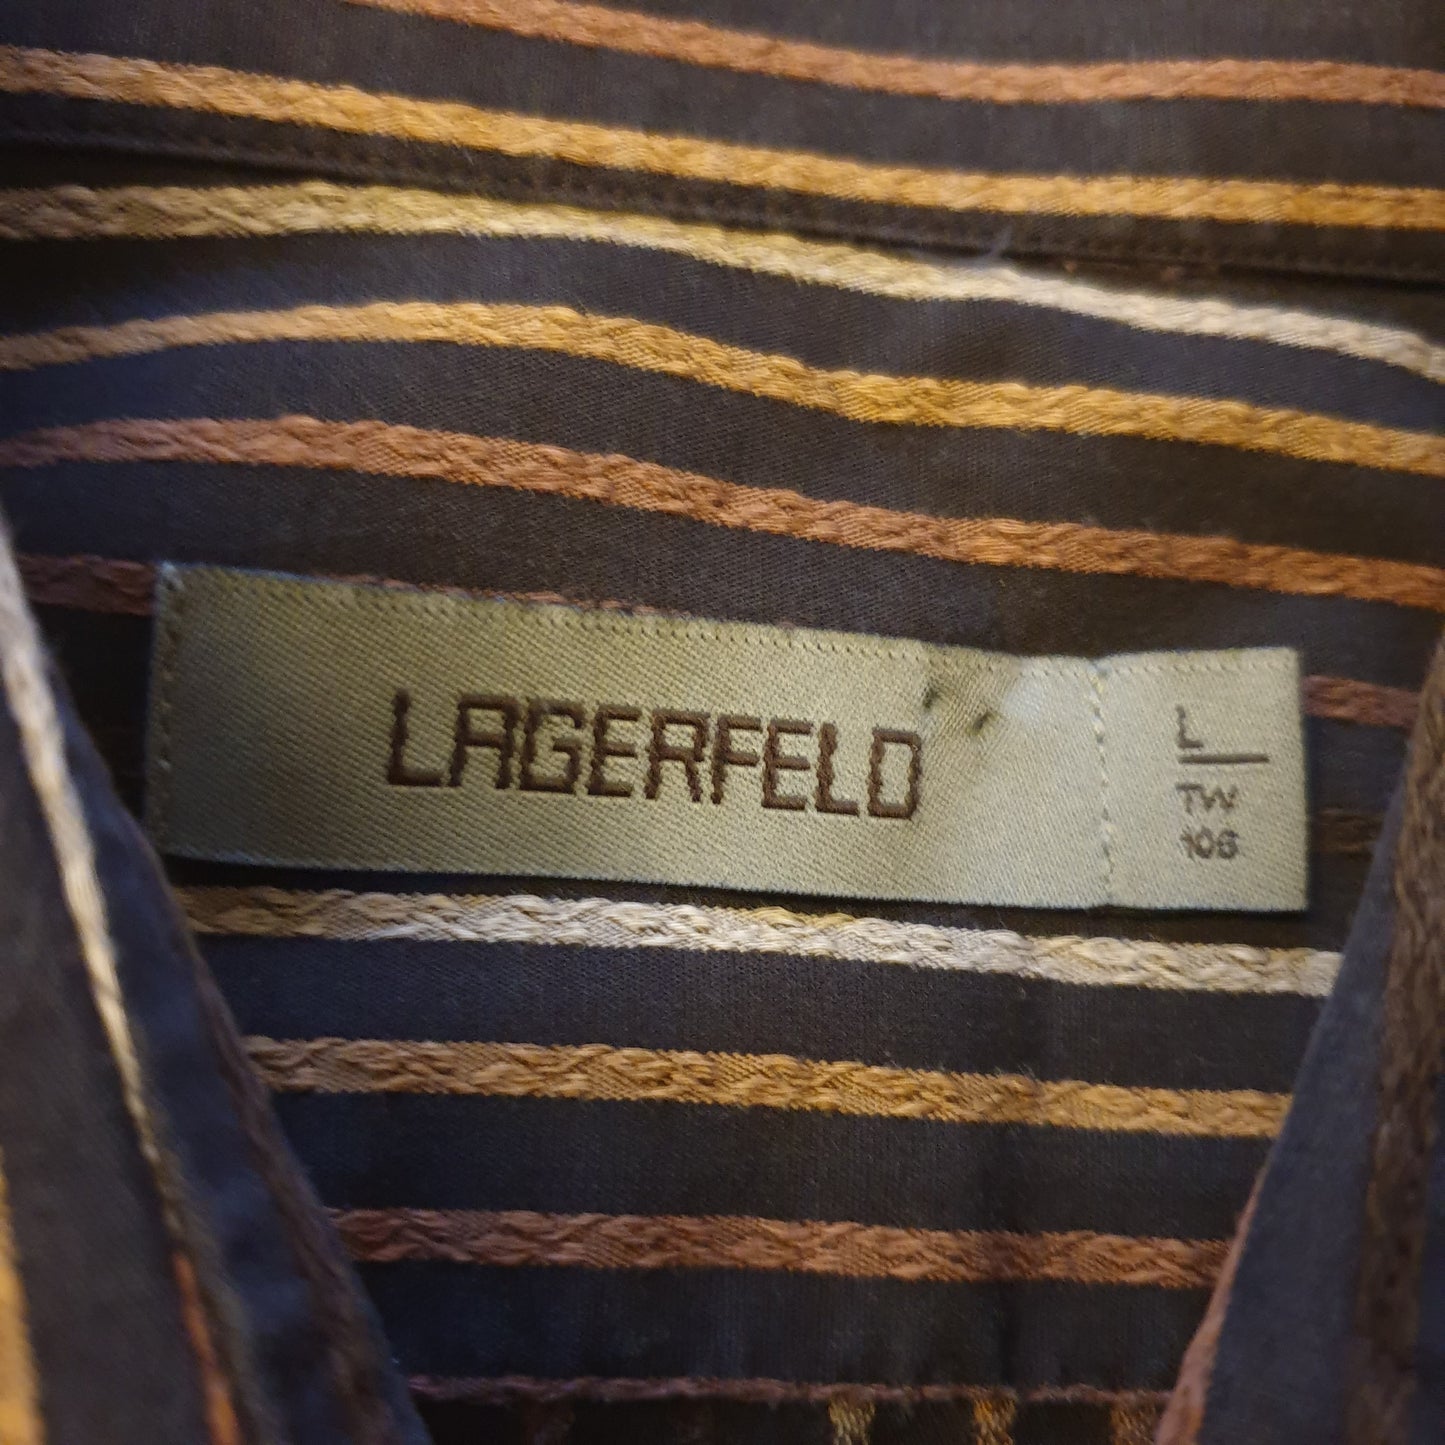 Lagerfeld Shirt S-M